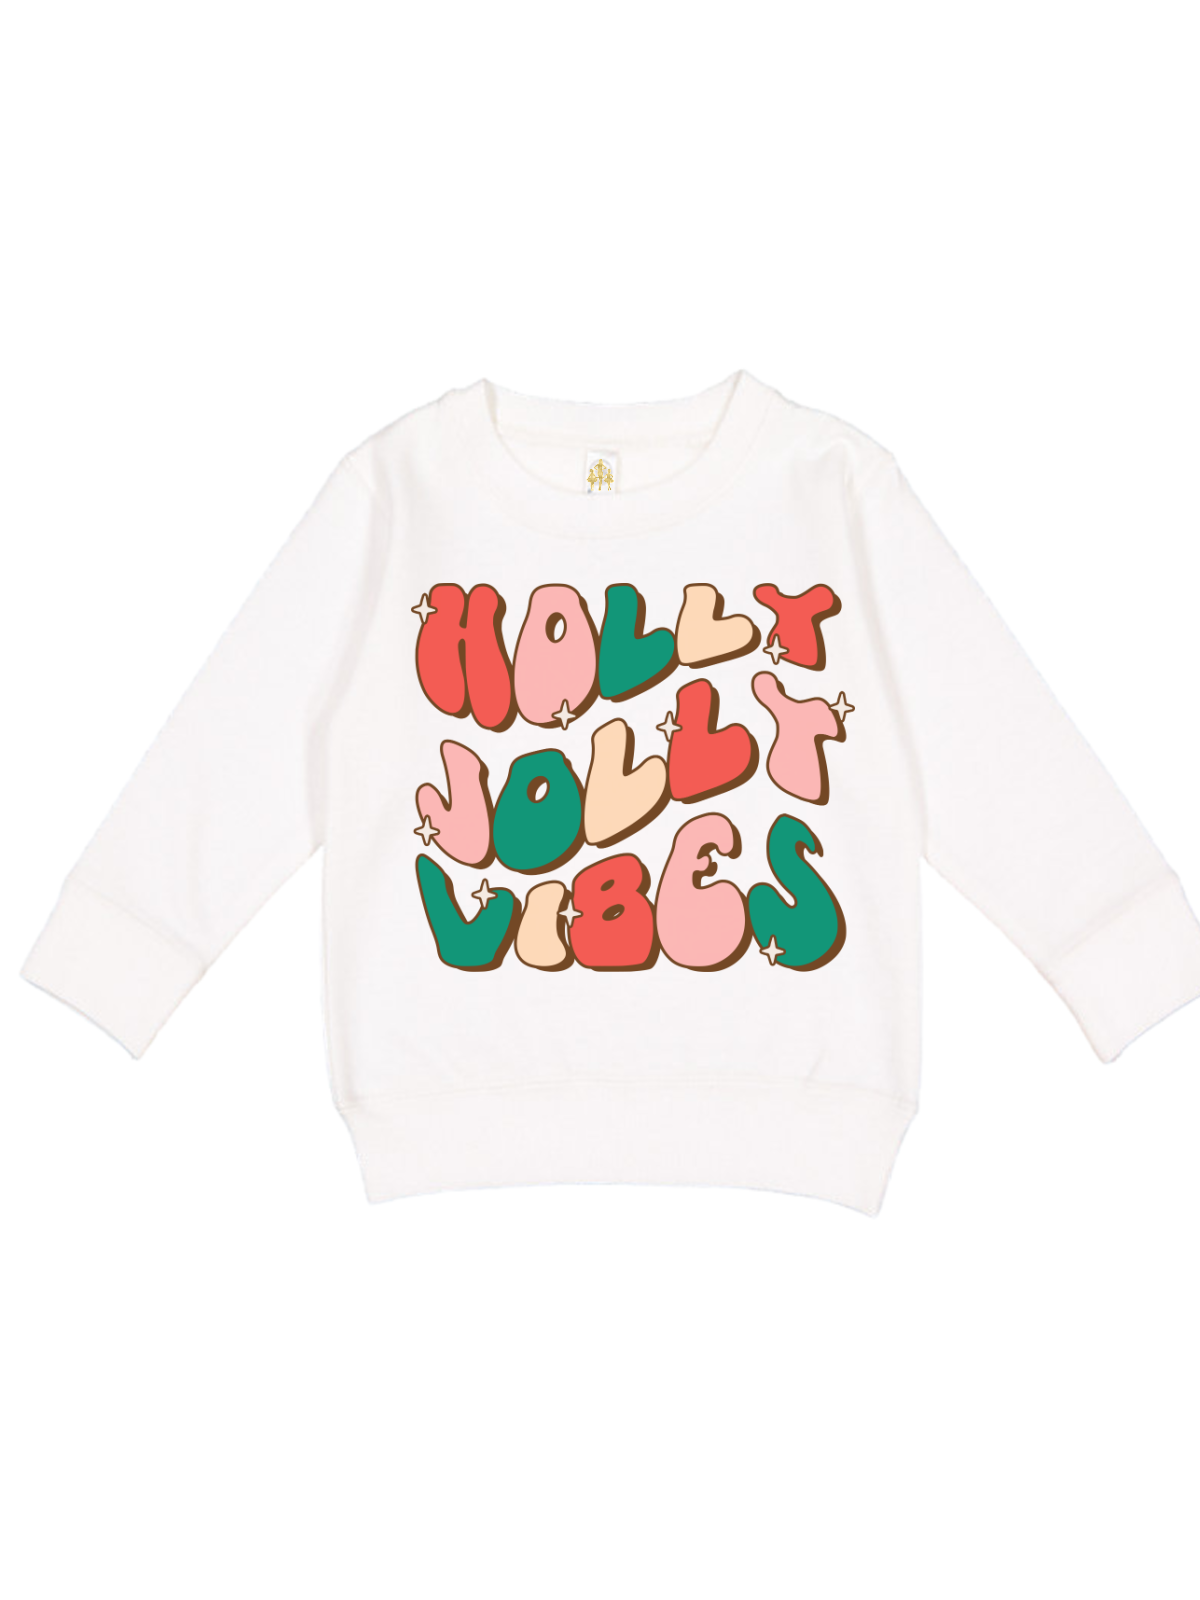 Holly Jolly Vibes Kids Christmas Sweatshirt